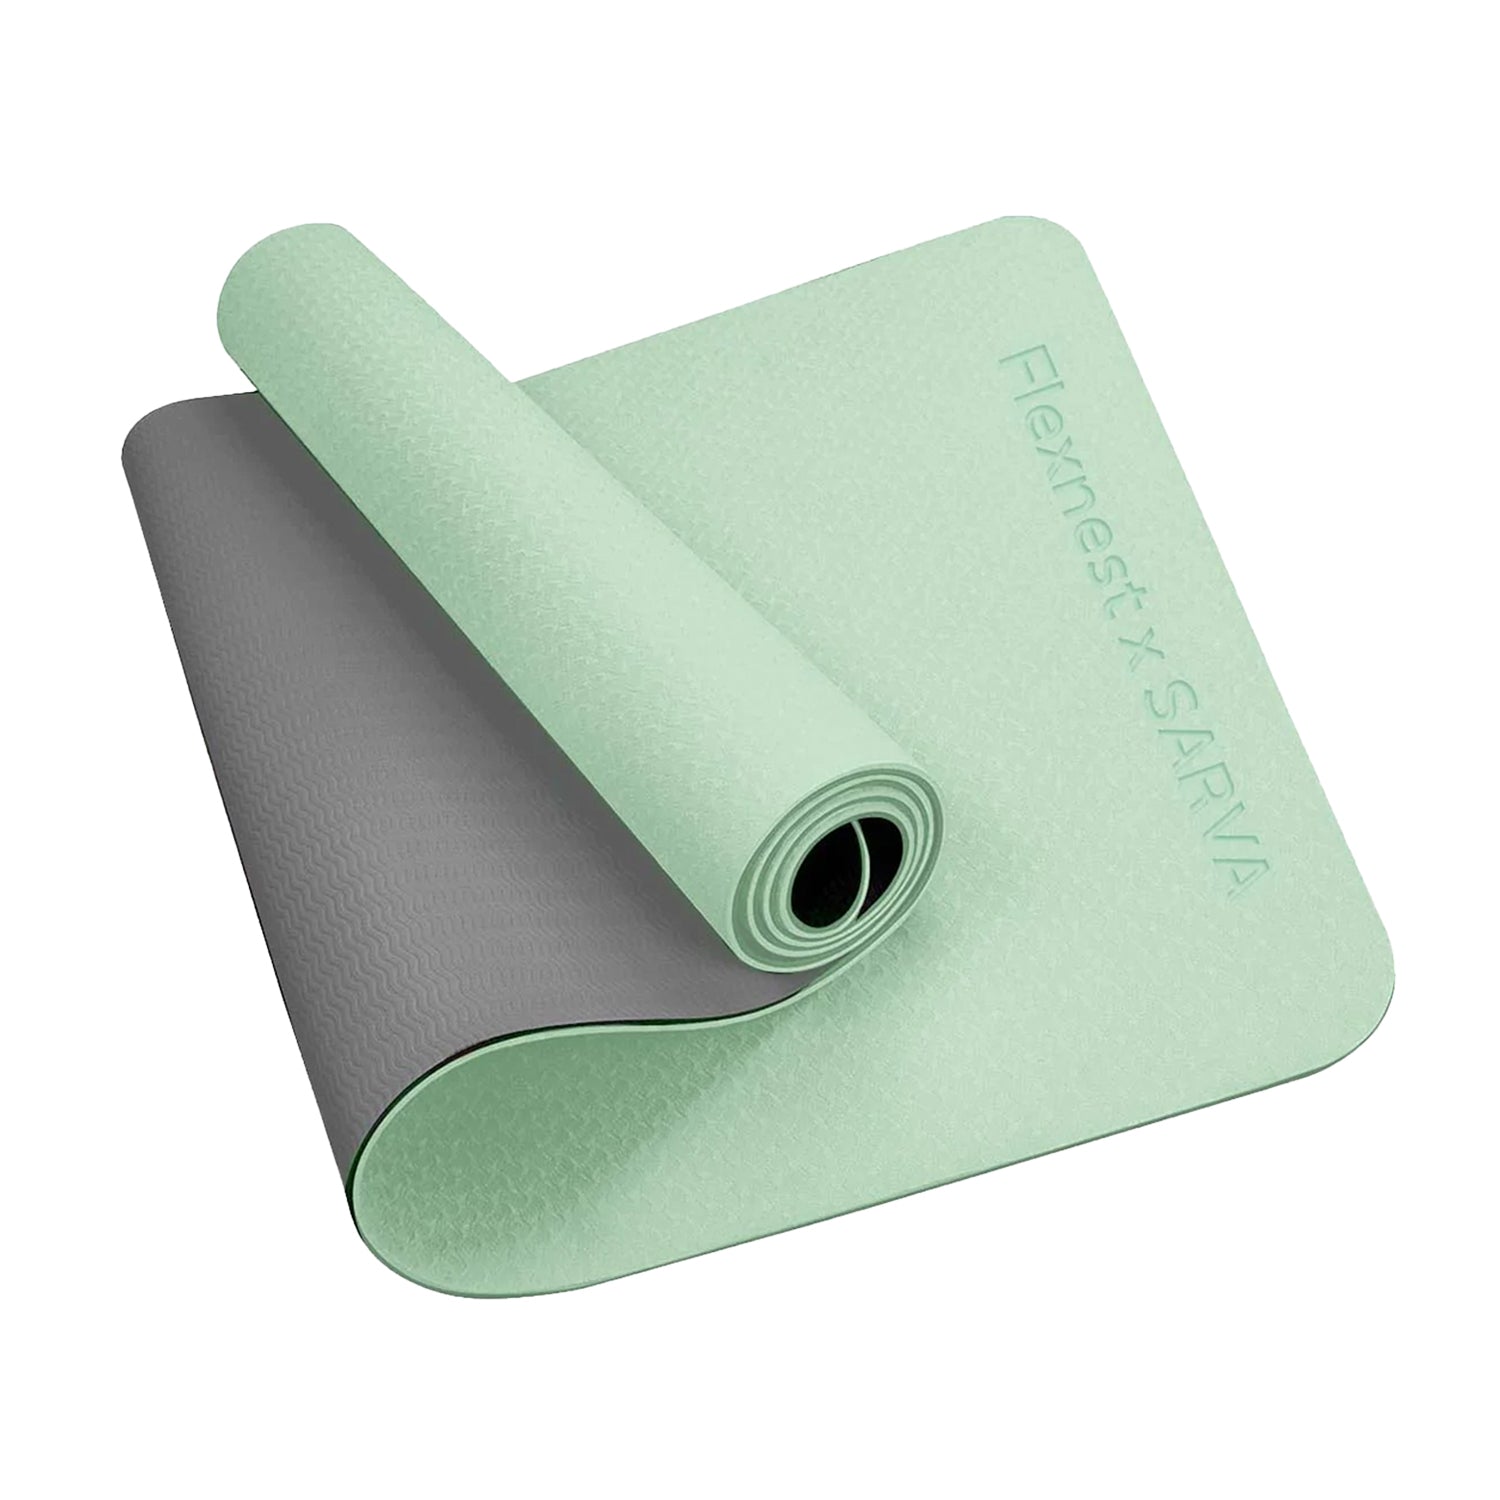 Buy Best Yoga Mat Online, Exercise Mat for Home